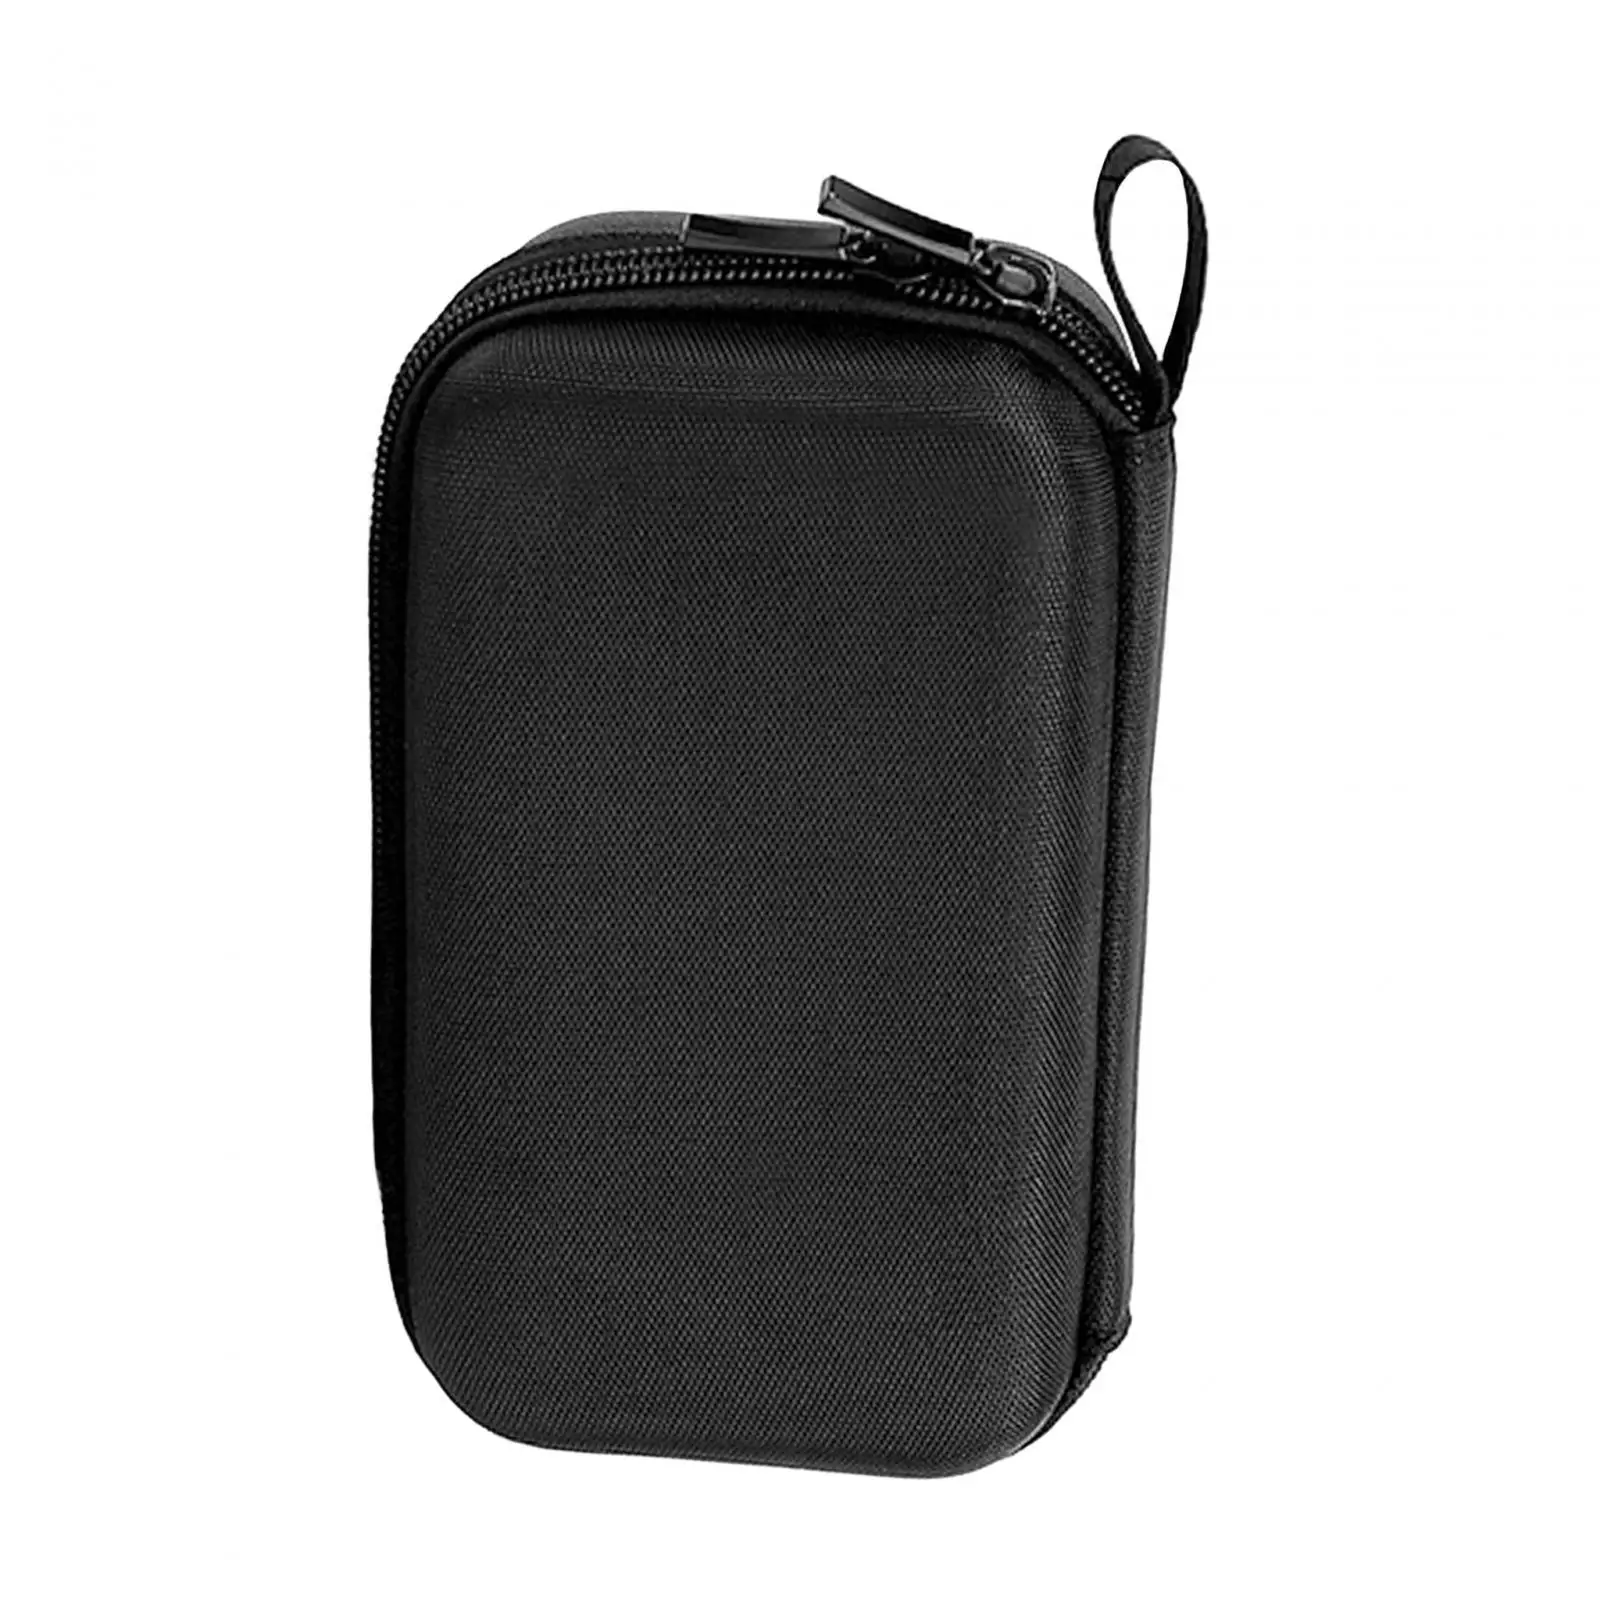 Action Camera Bag Camera Case Storage Case Portable Waterproof Handbag Carrying Case Travel Bag for Go 3 Accessories Organizer